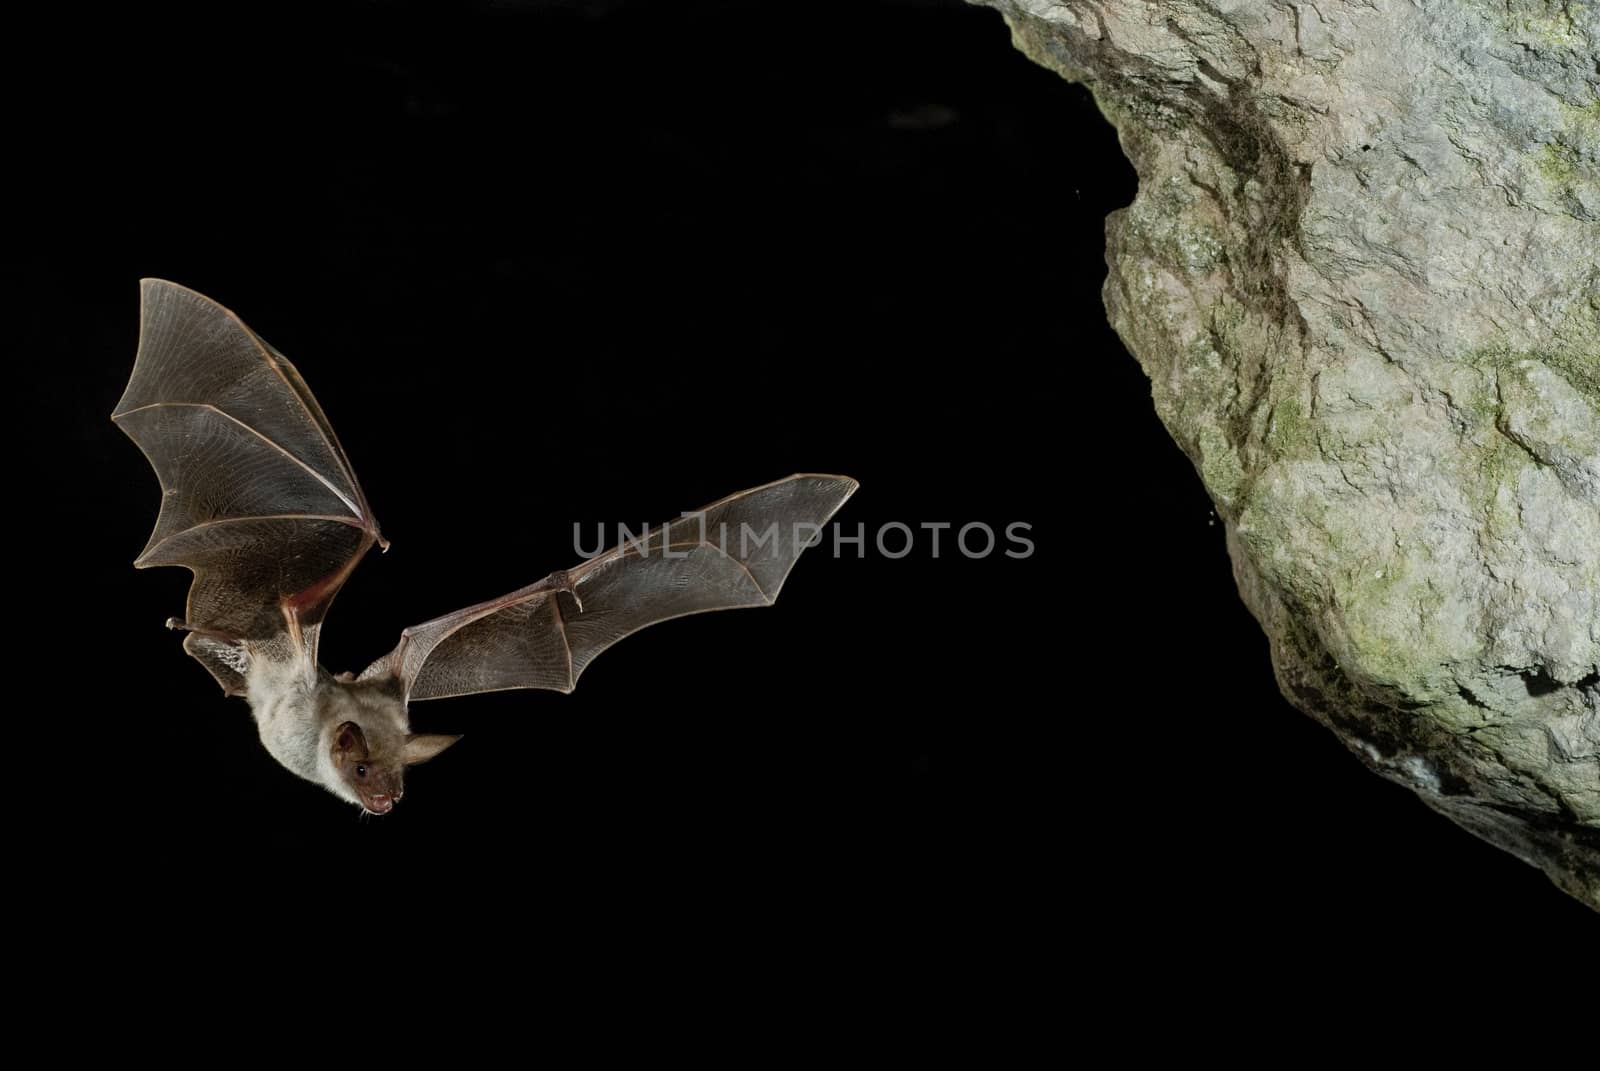 Bat buzzard, myotis myotis, flight in his cave by jalonsohu@gmail.com